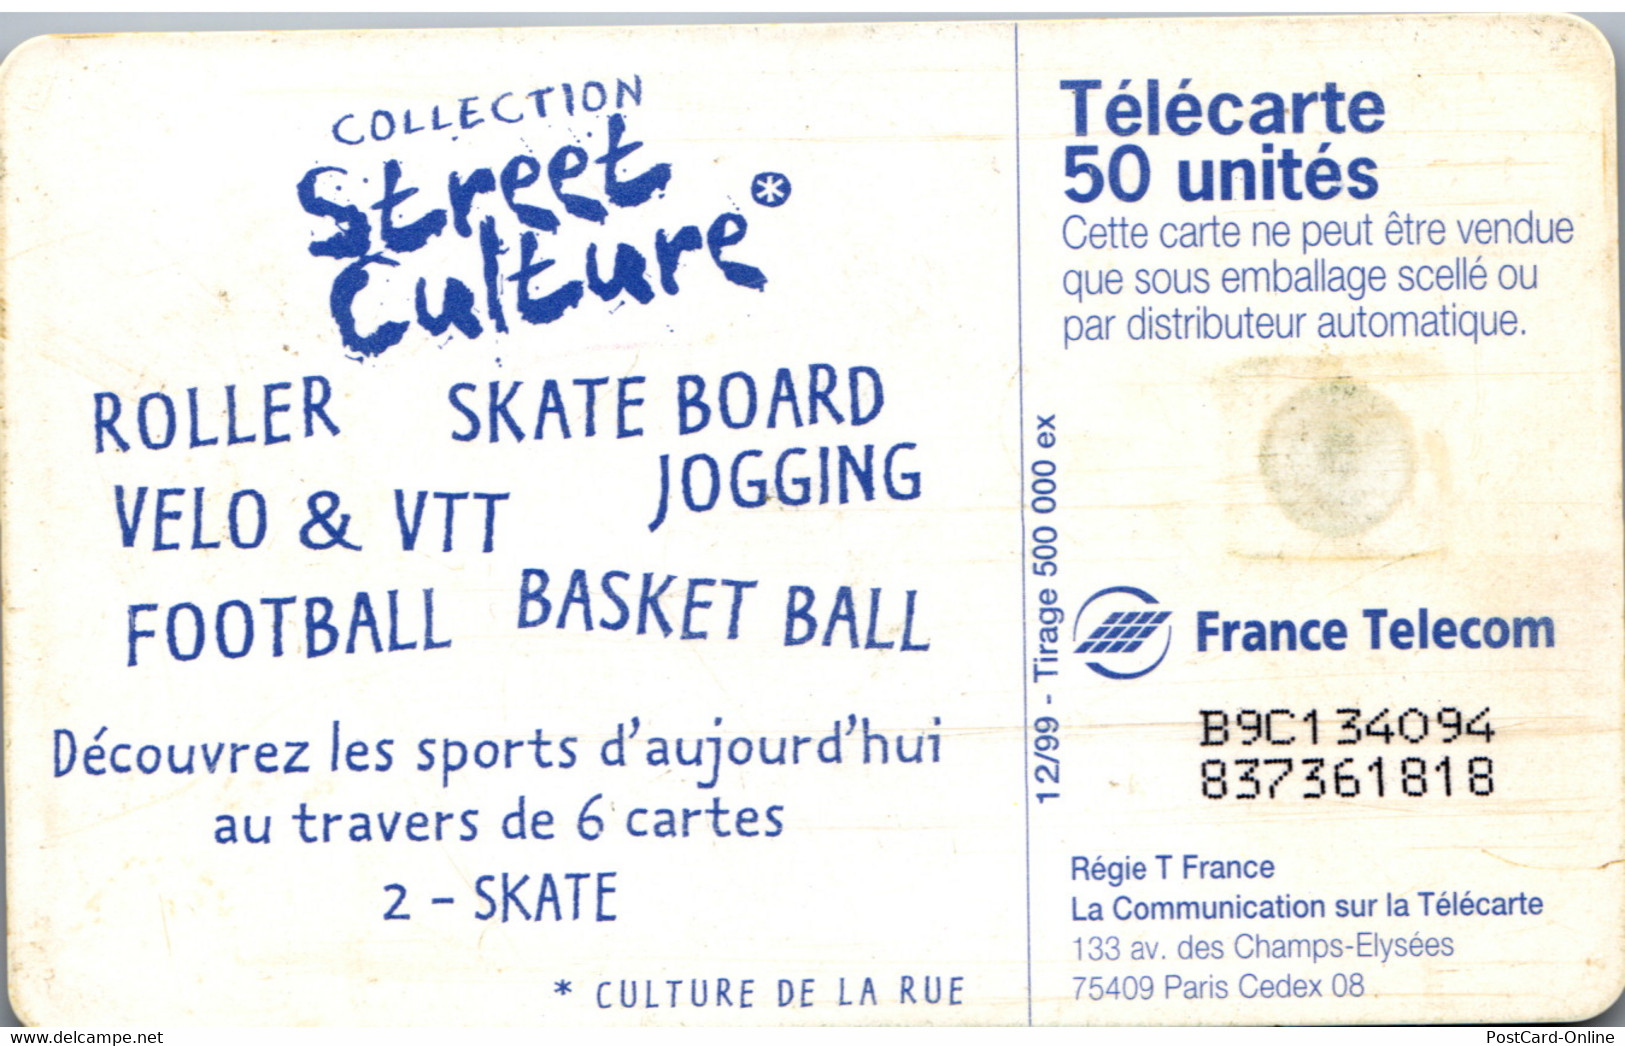 15939 - Frankreich - Skate , Street Culture - 1999